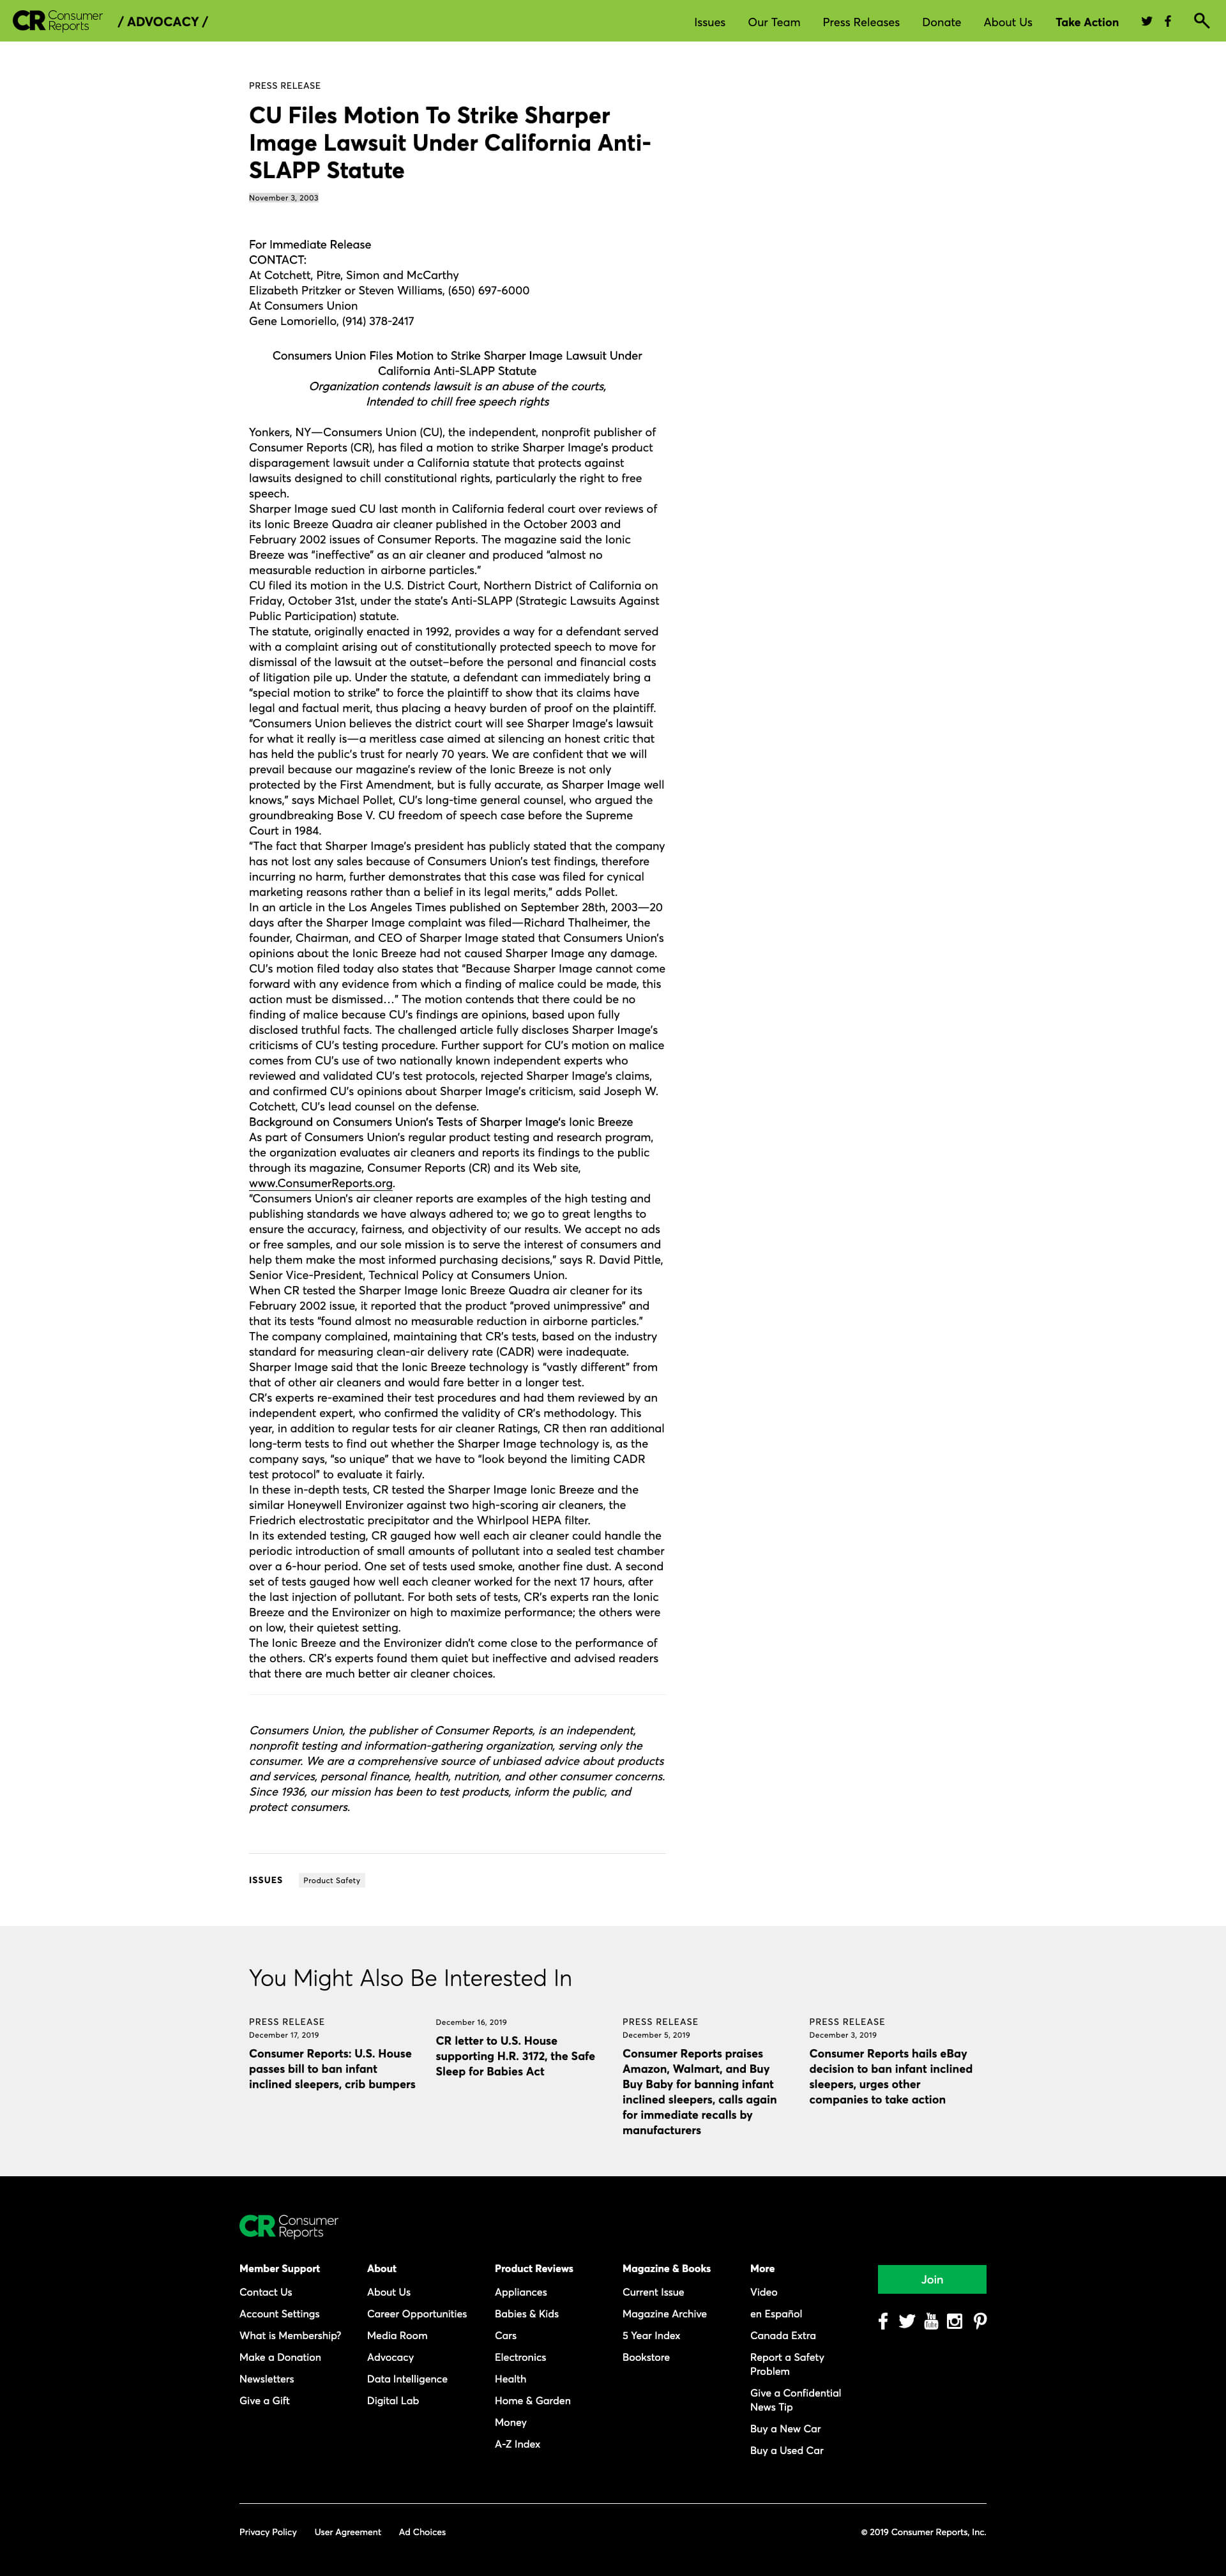 Screenshot Press cradvocacy-consumerreports-org-press-release-cu-files-motion-to-strike-sharper-image-lawsuit-under-california-anti-slapp-statute-2019-12-18-13_06_25